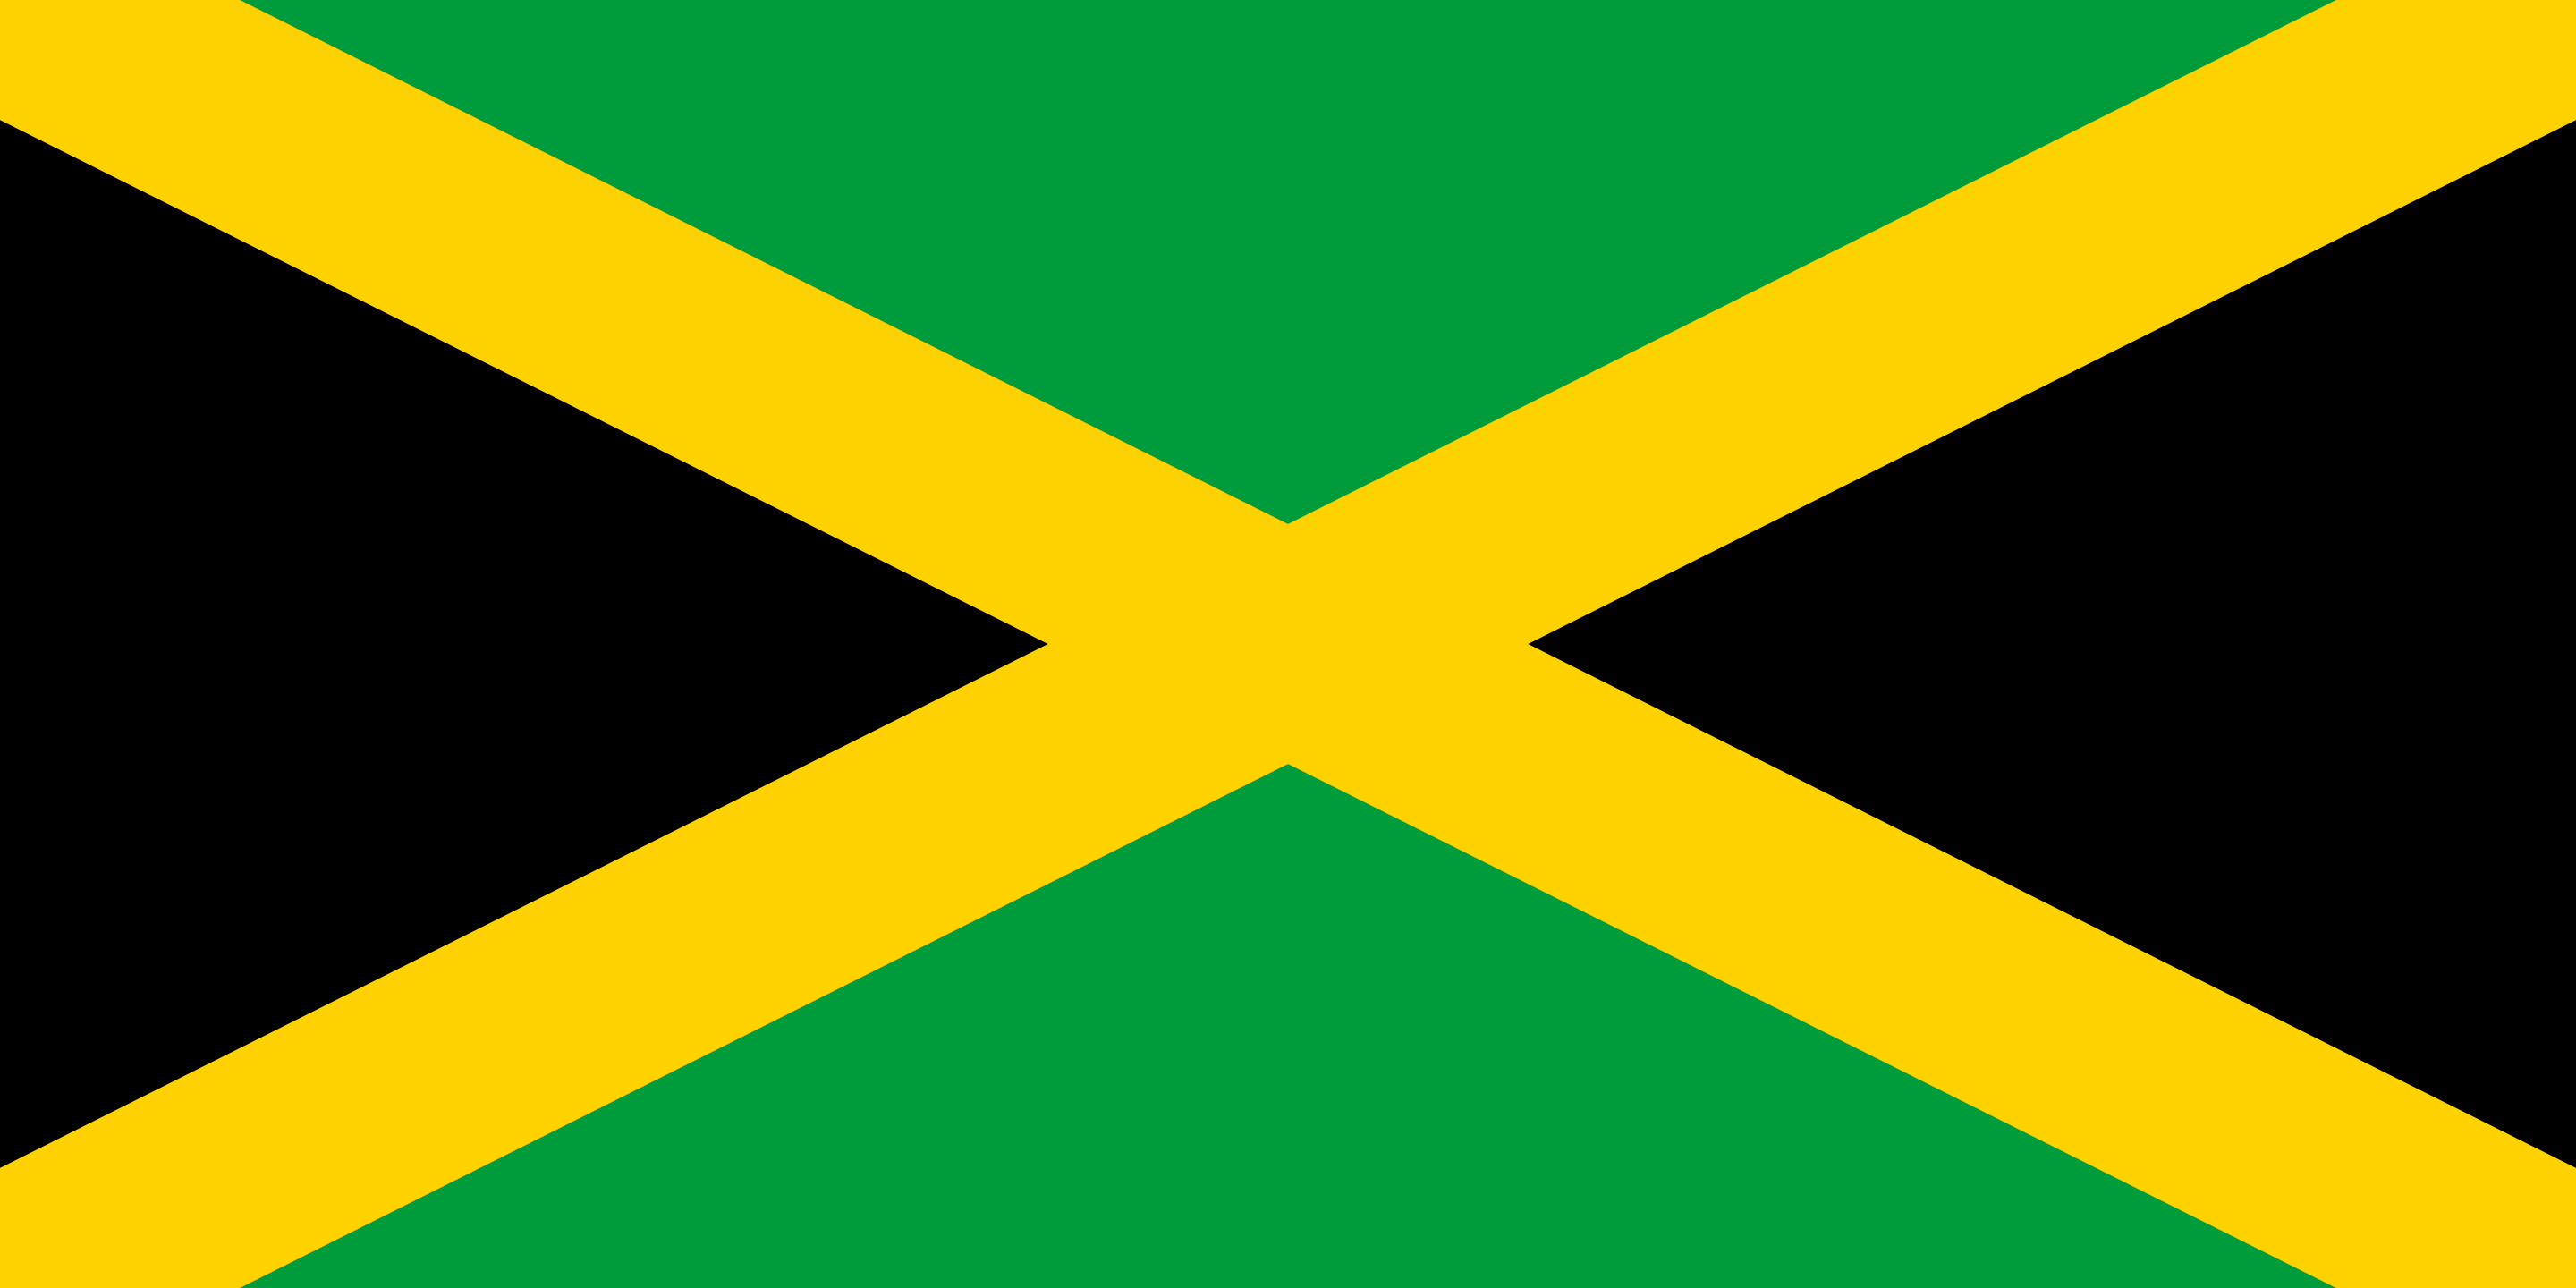 Facts of Jamaica